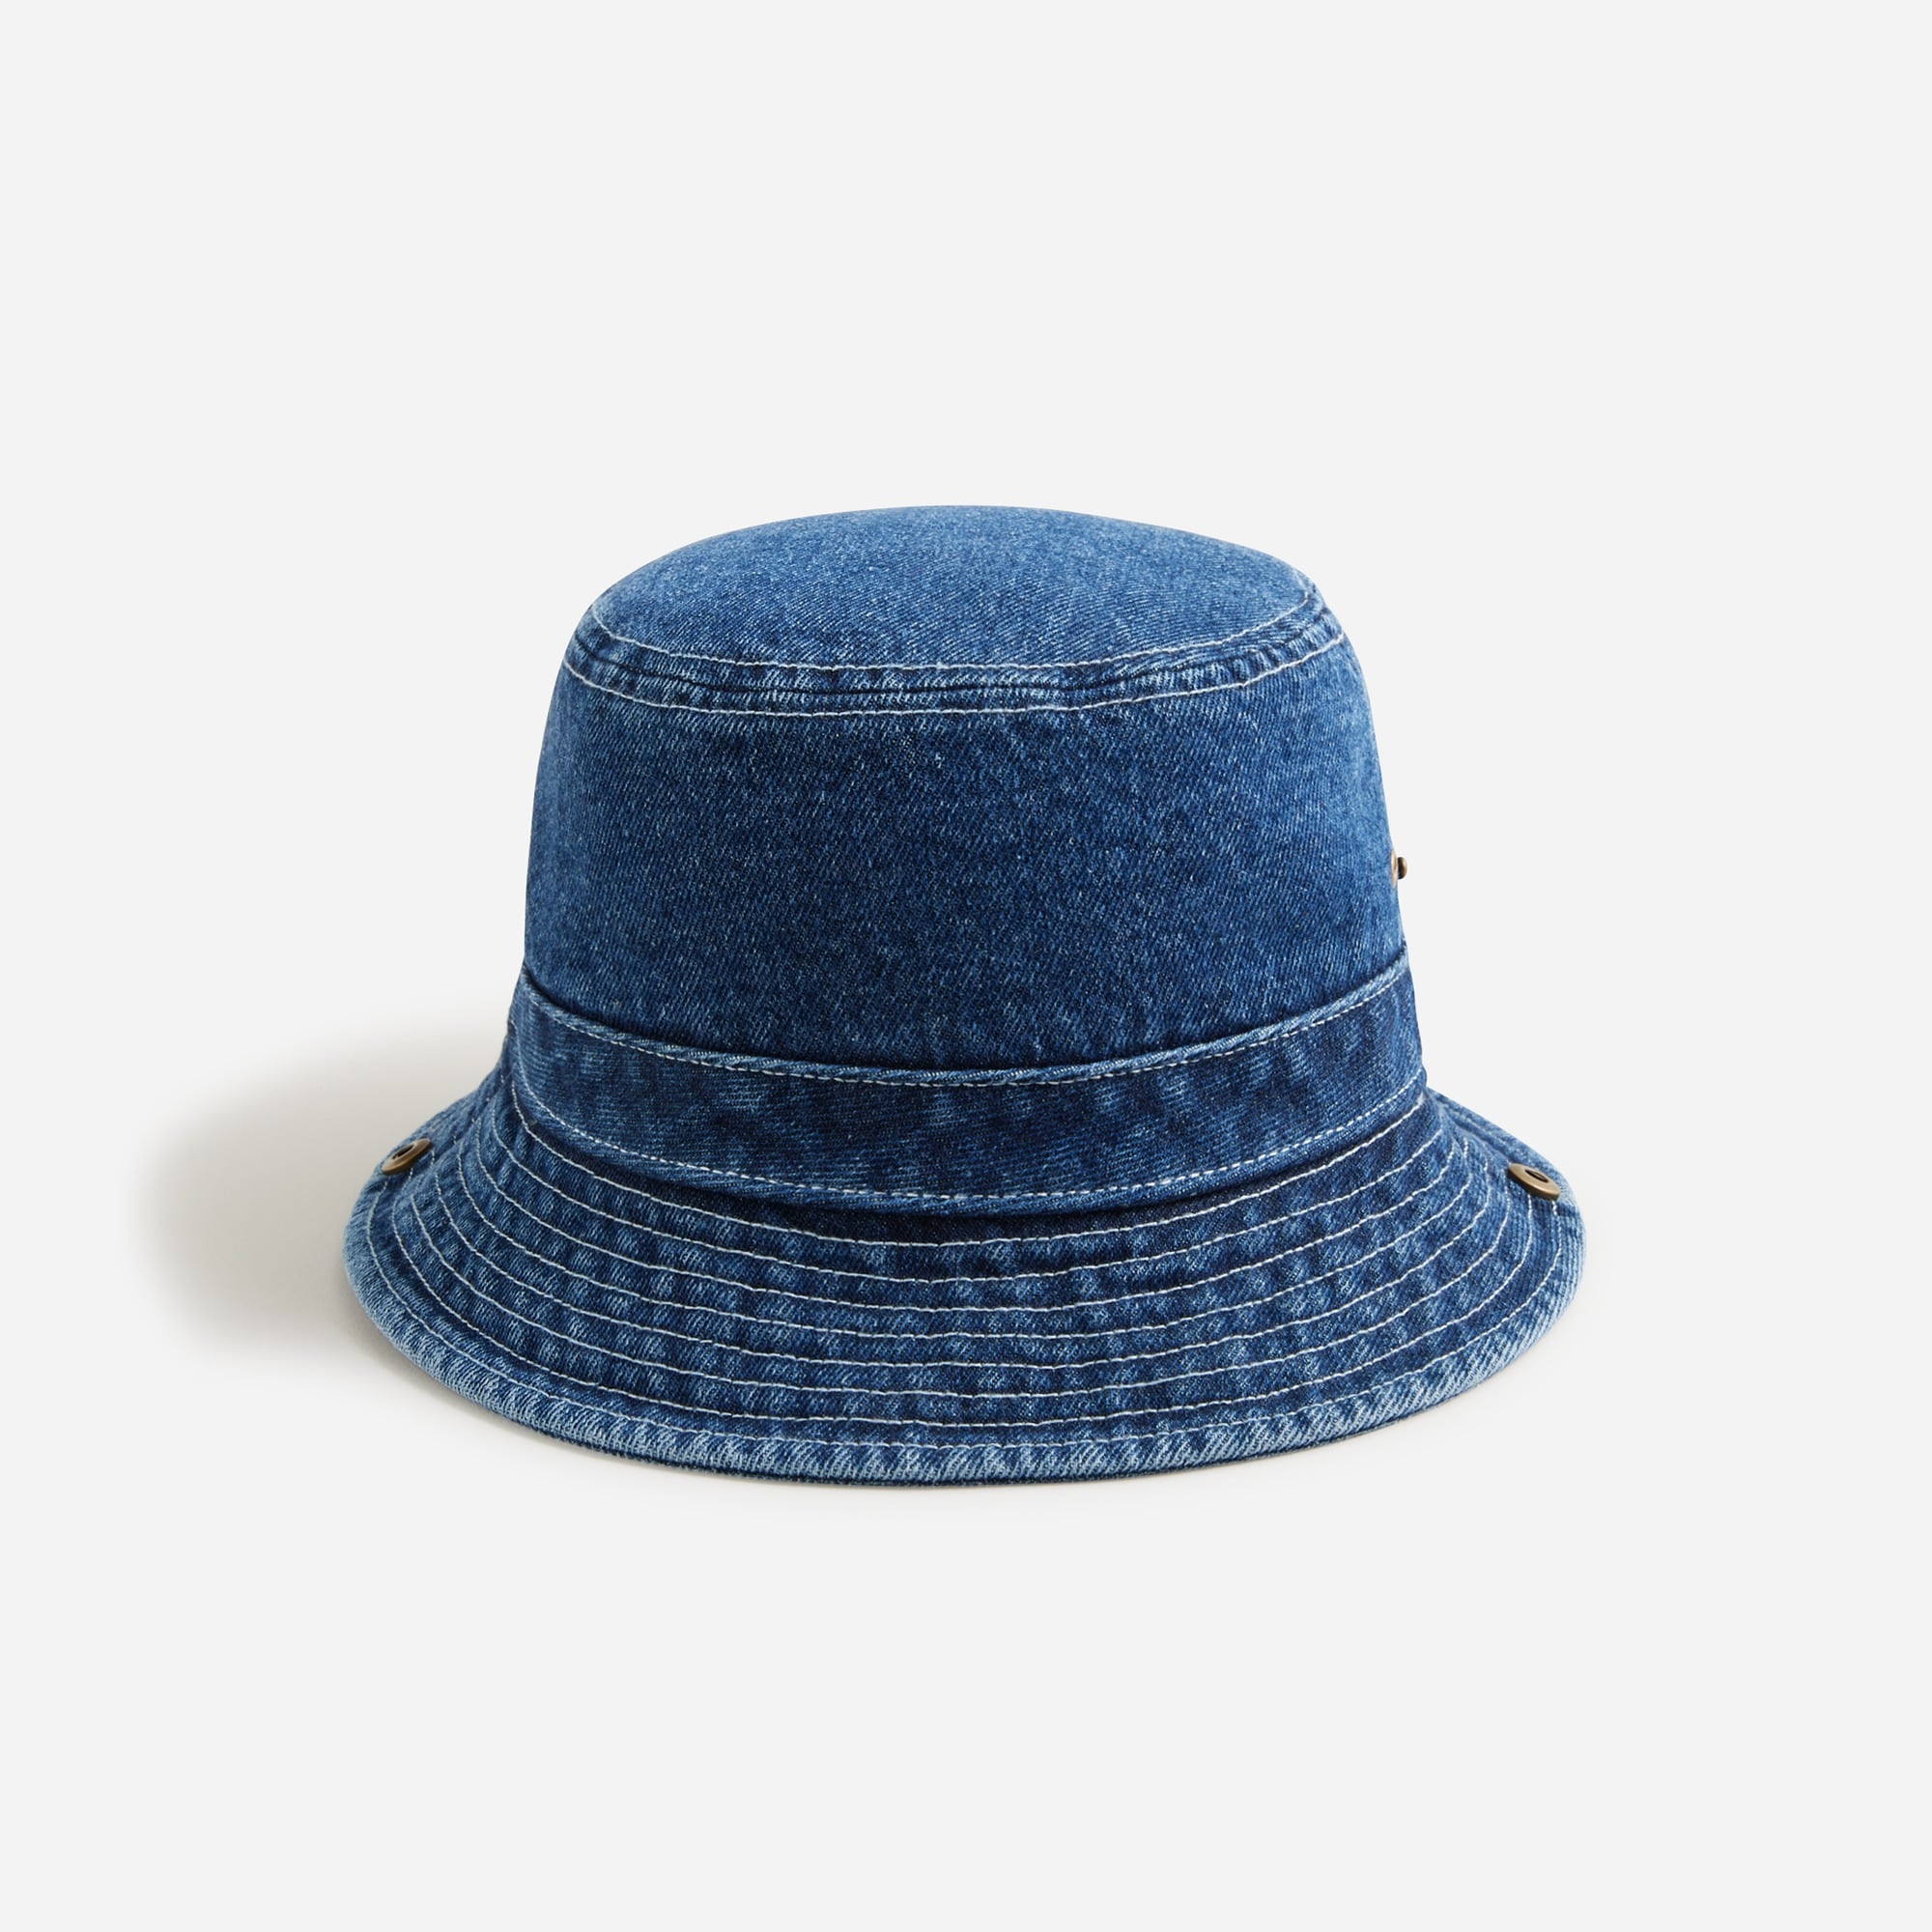  Denim bucket hat with snaps